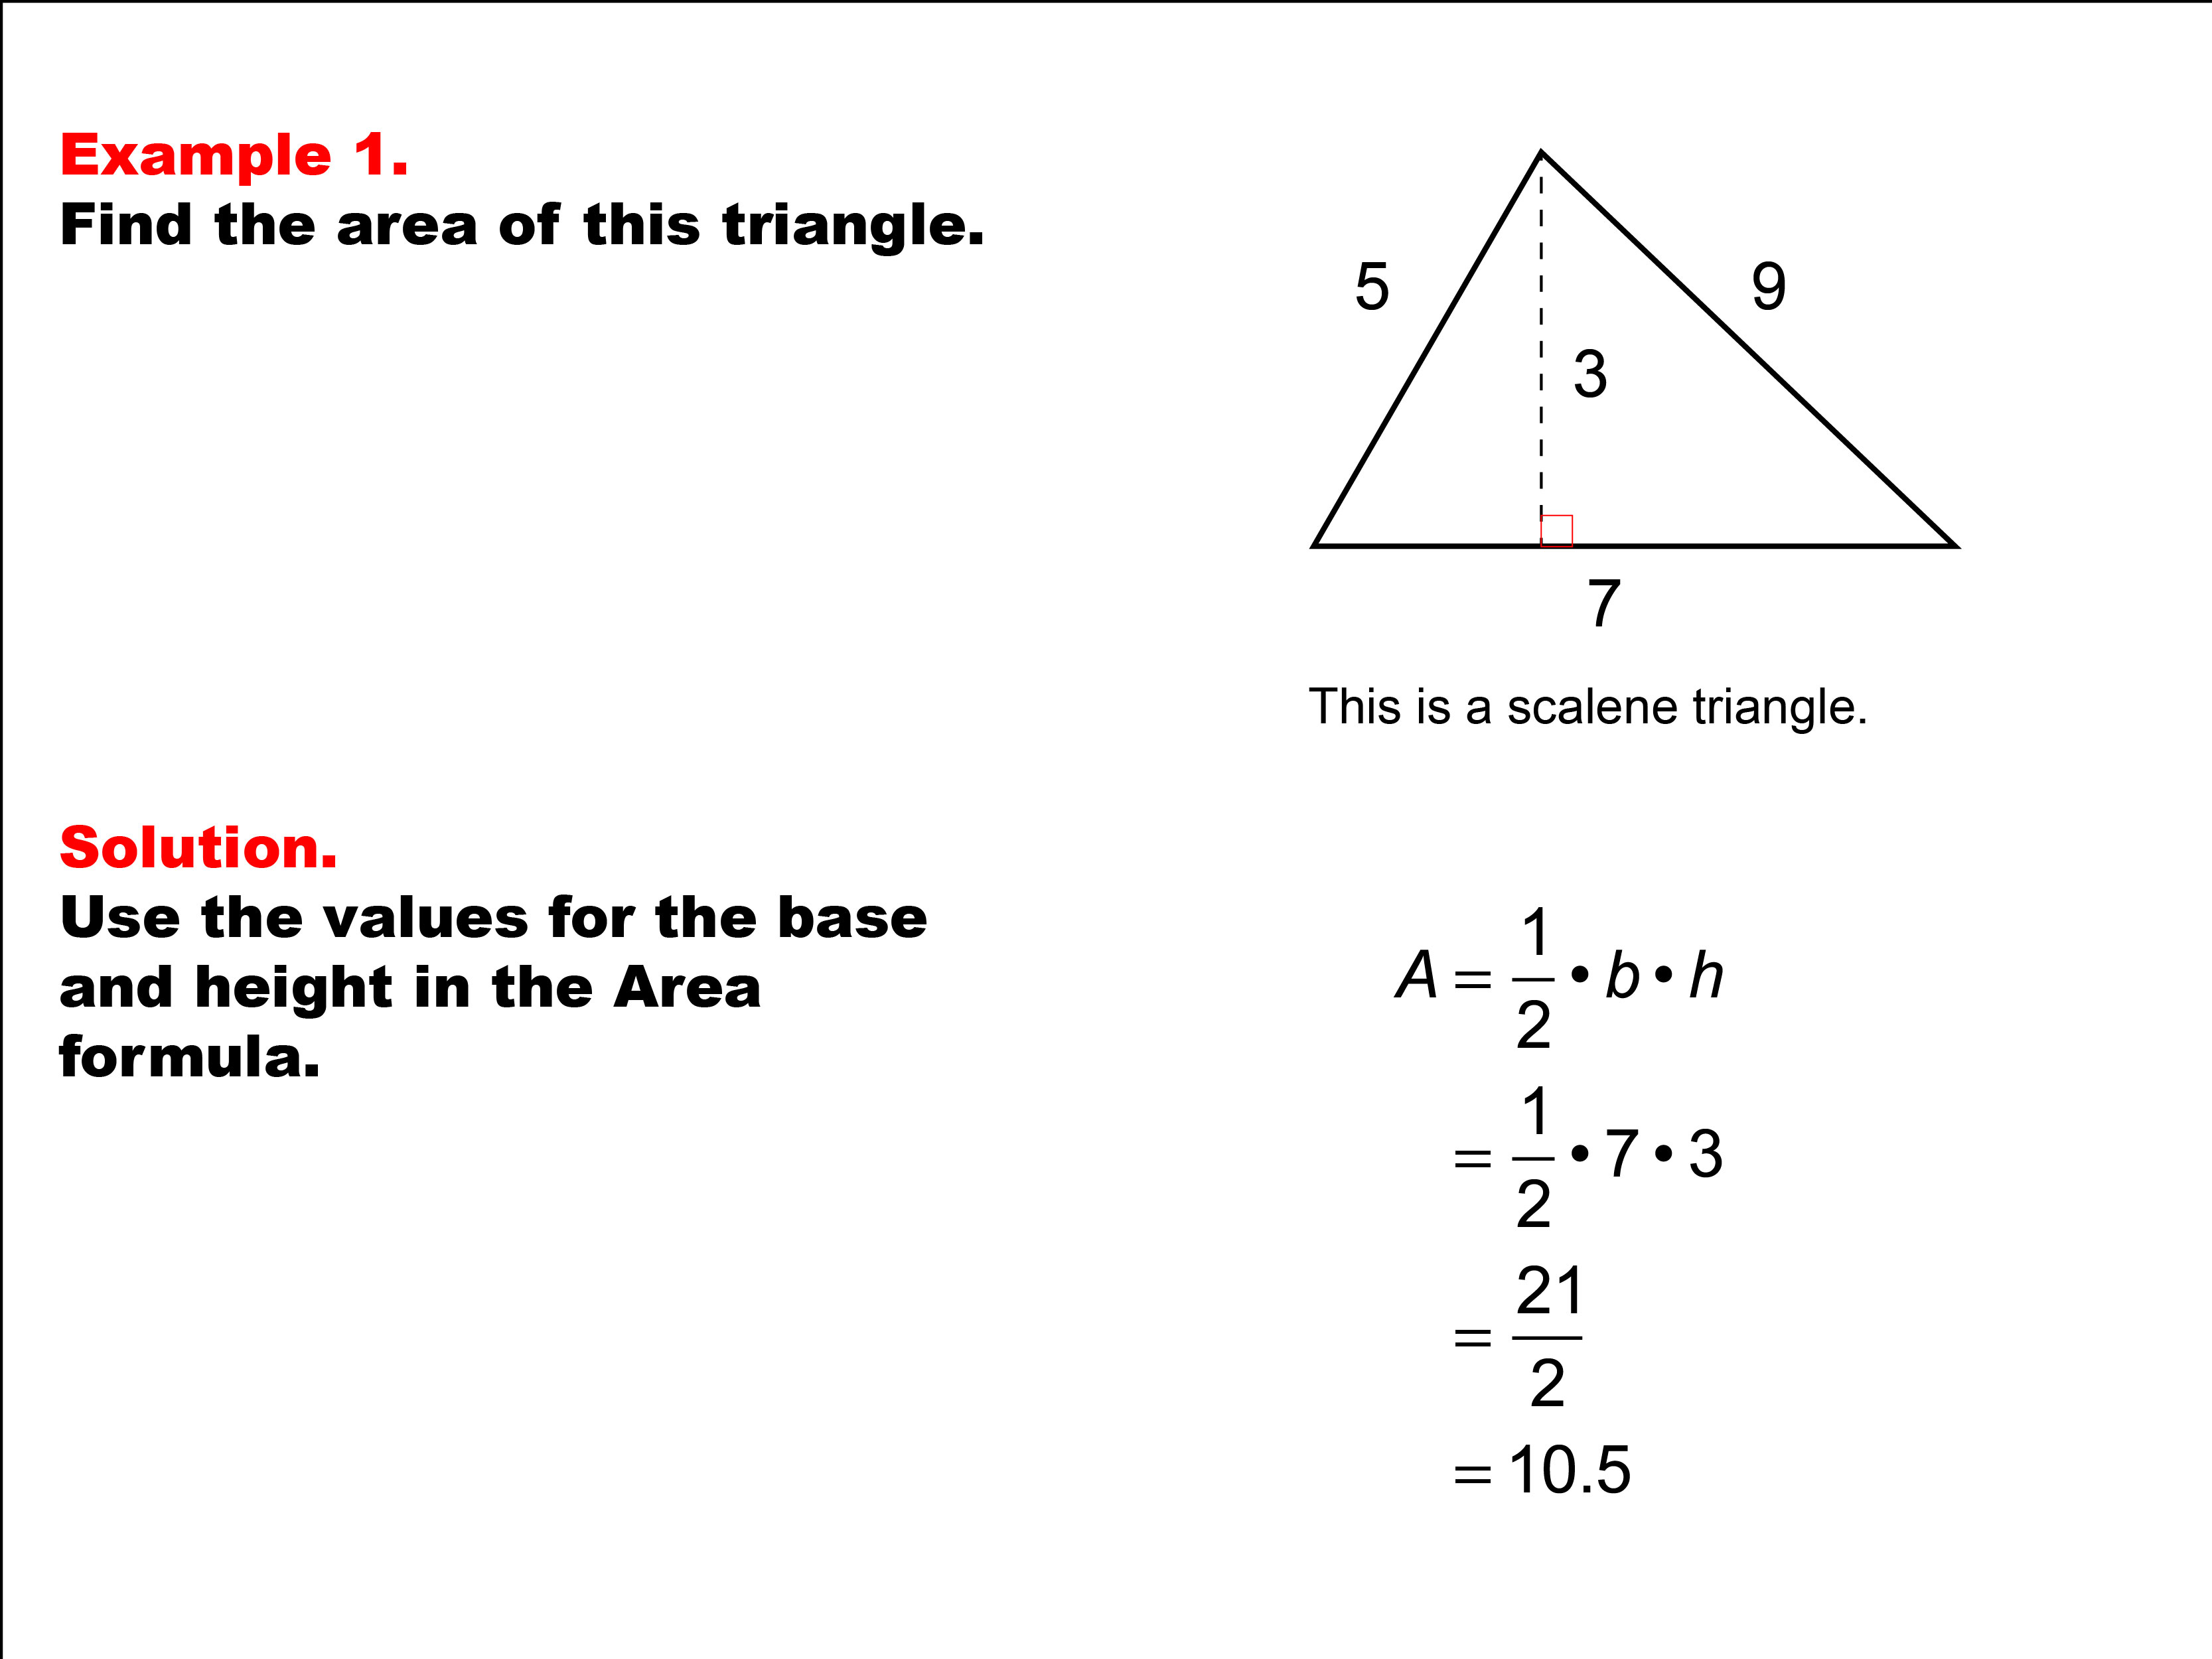 height of isosceles triangle